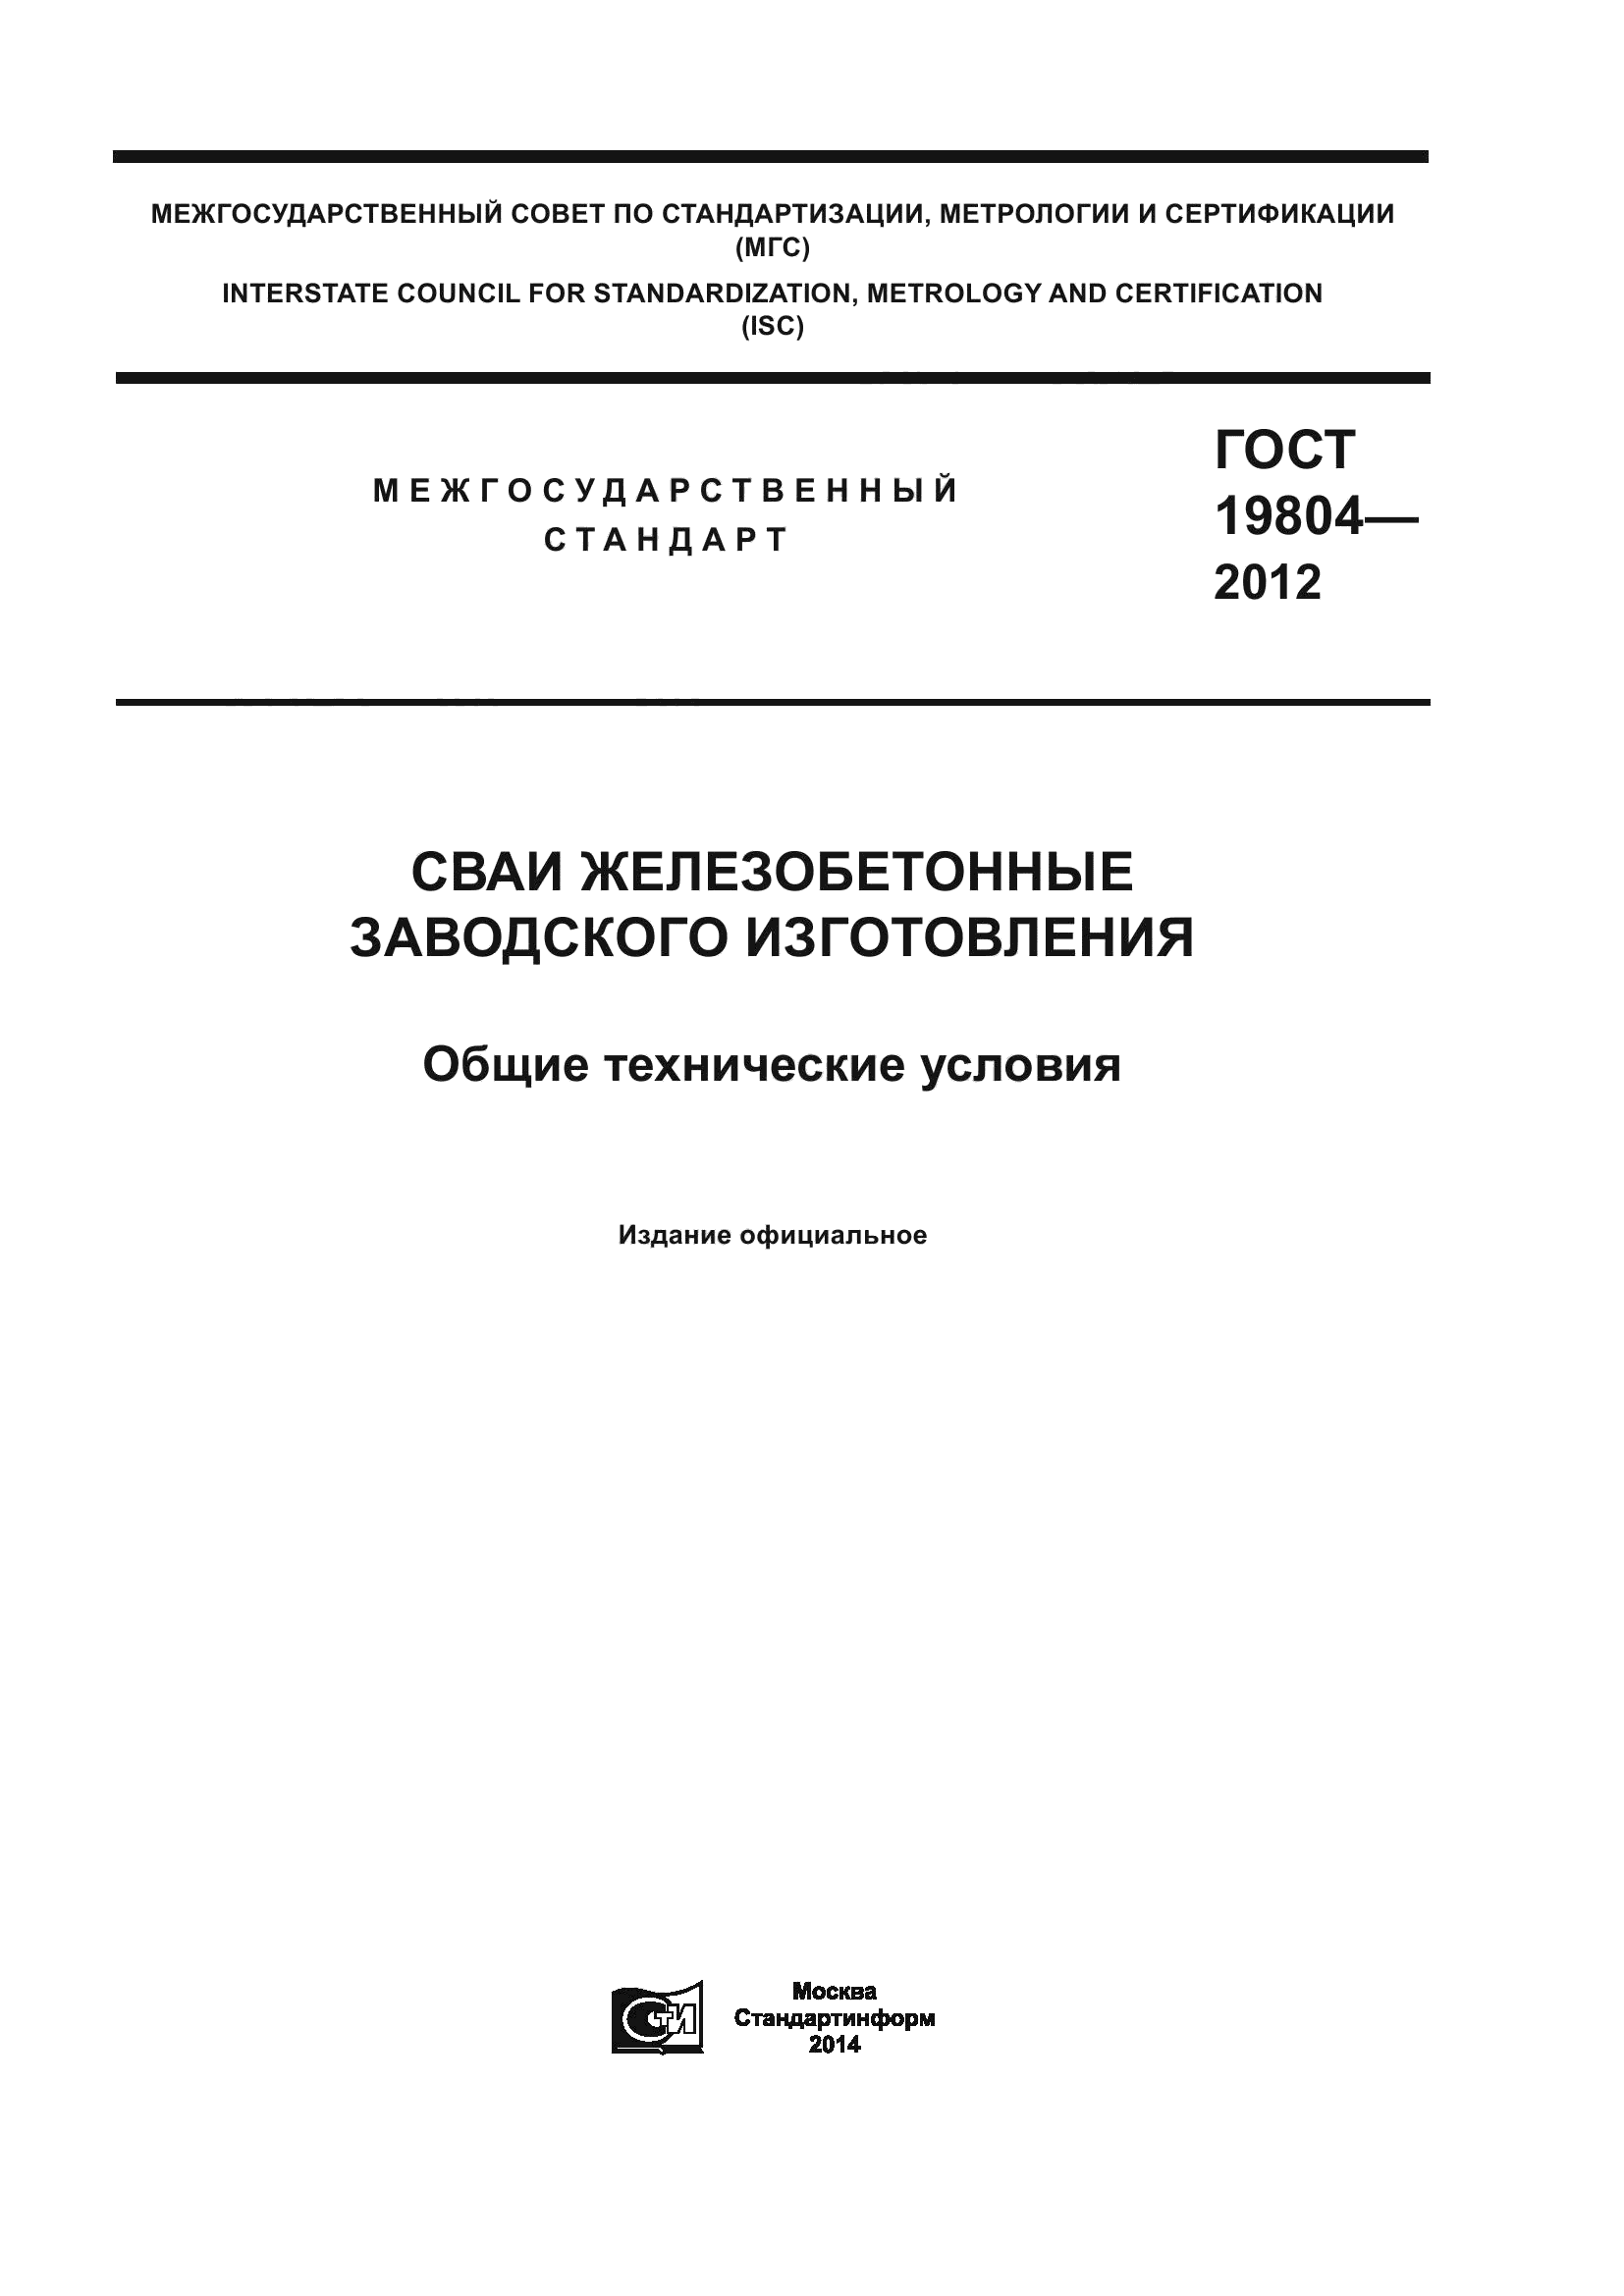 ГОСТ 19804-2012